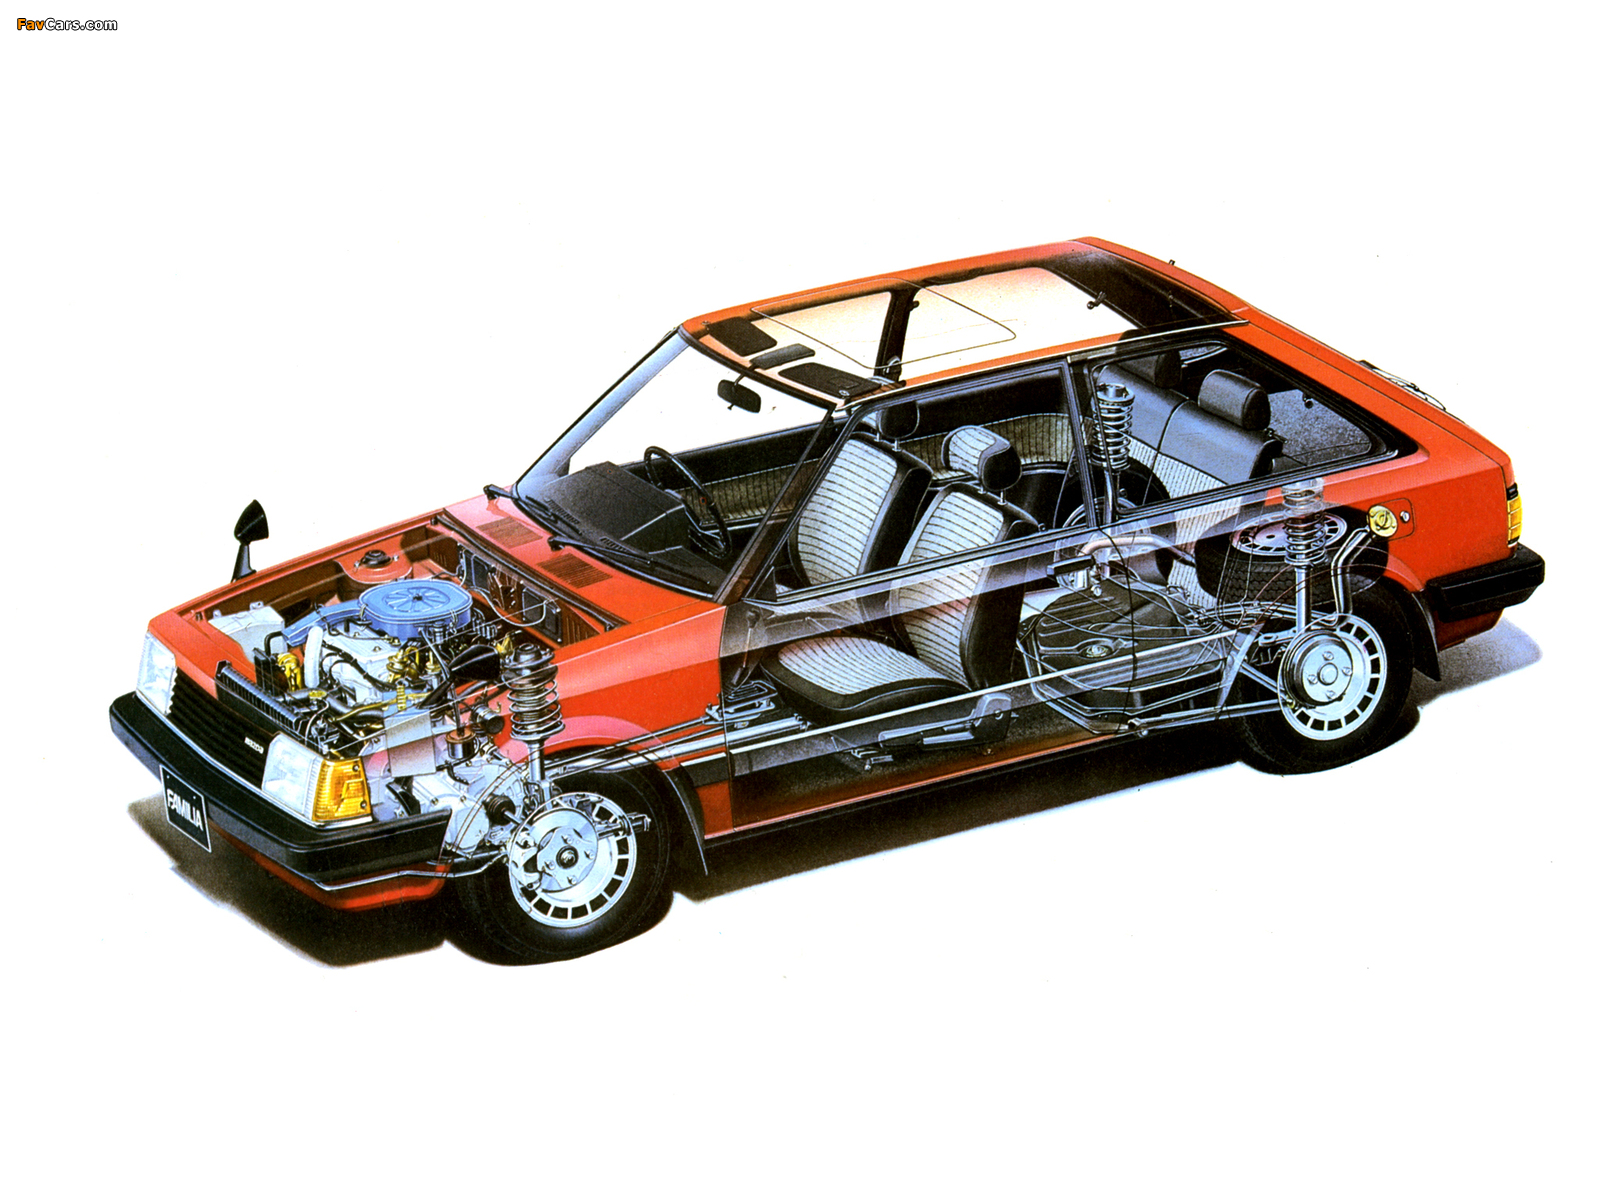 Mazda Familia Hatchback 1980–85 pictures (1600 x 1200)